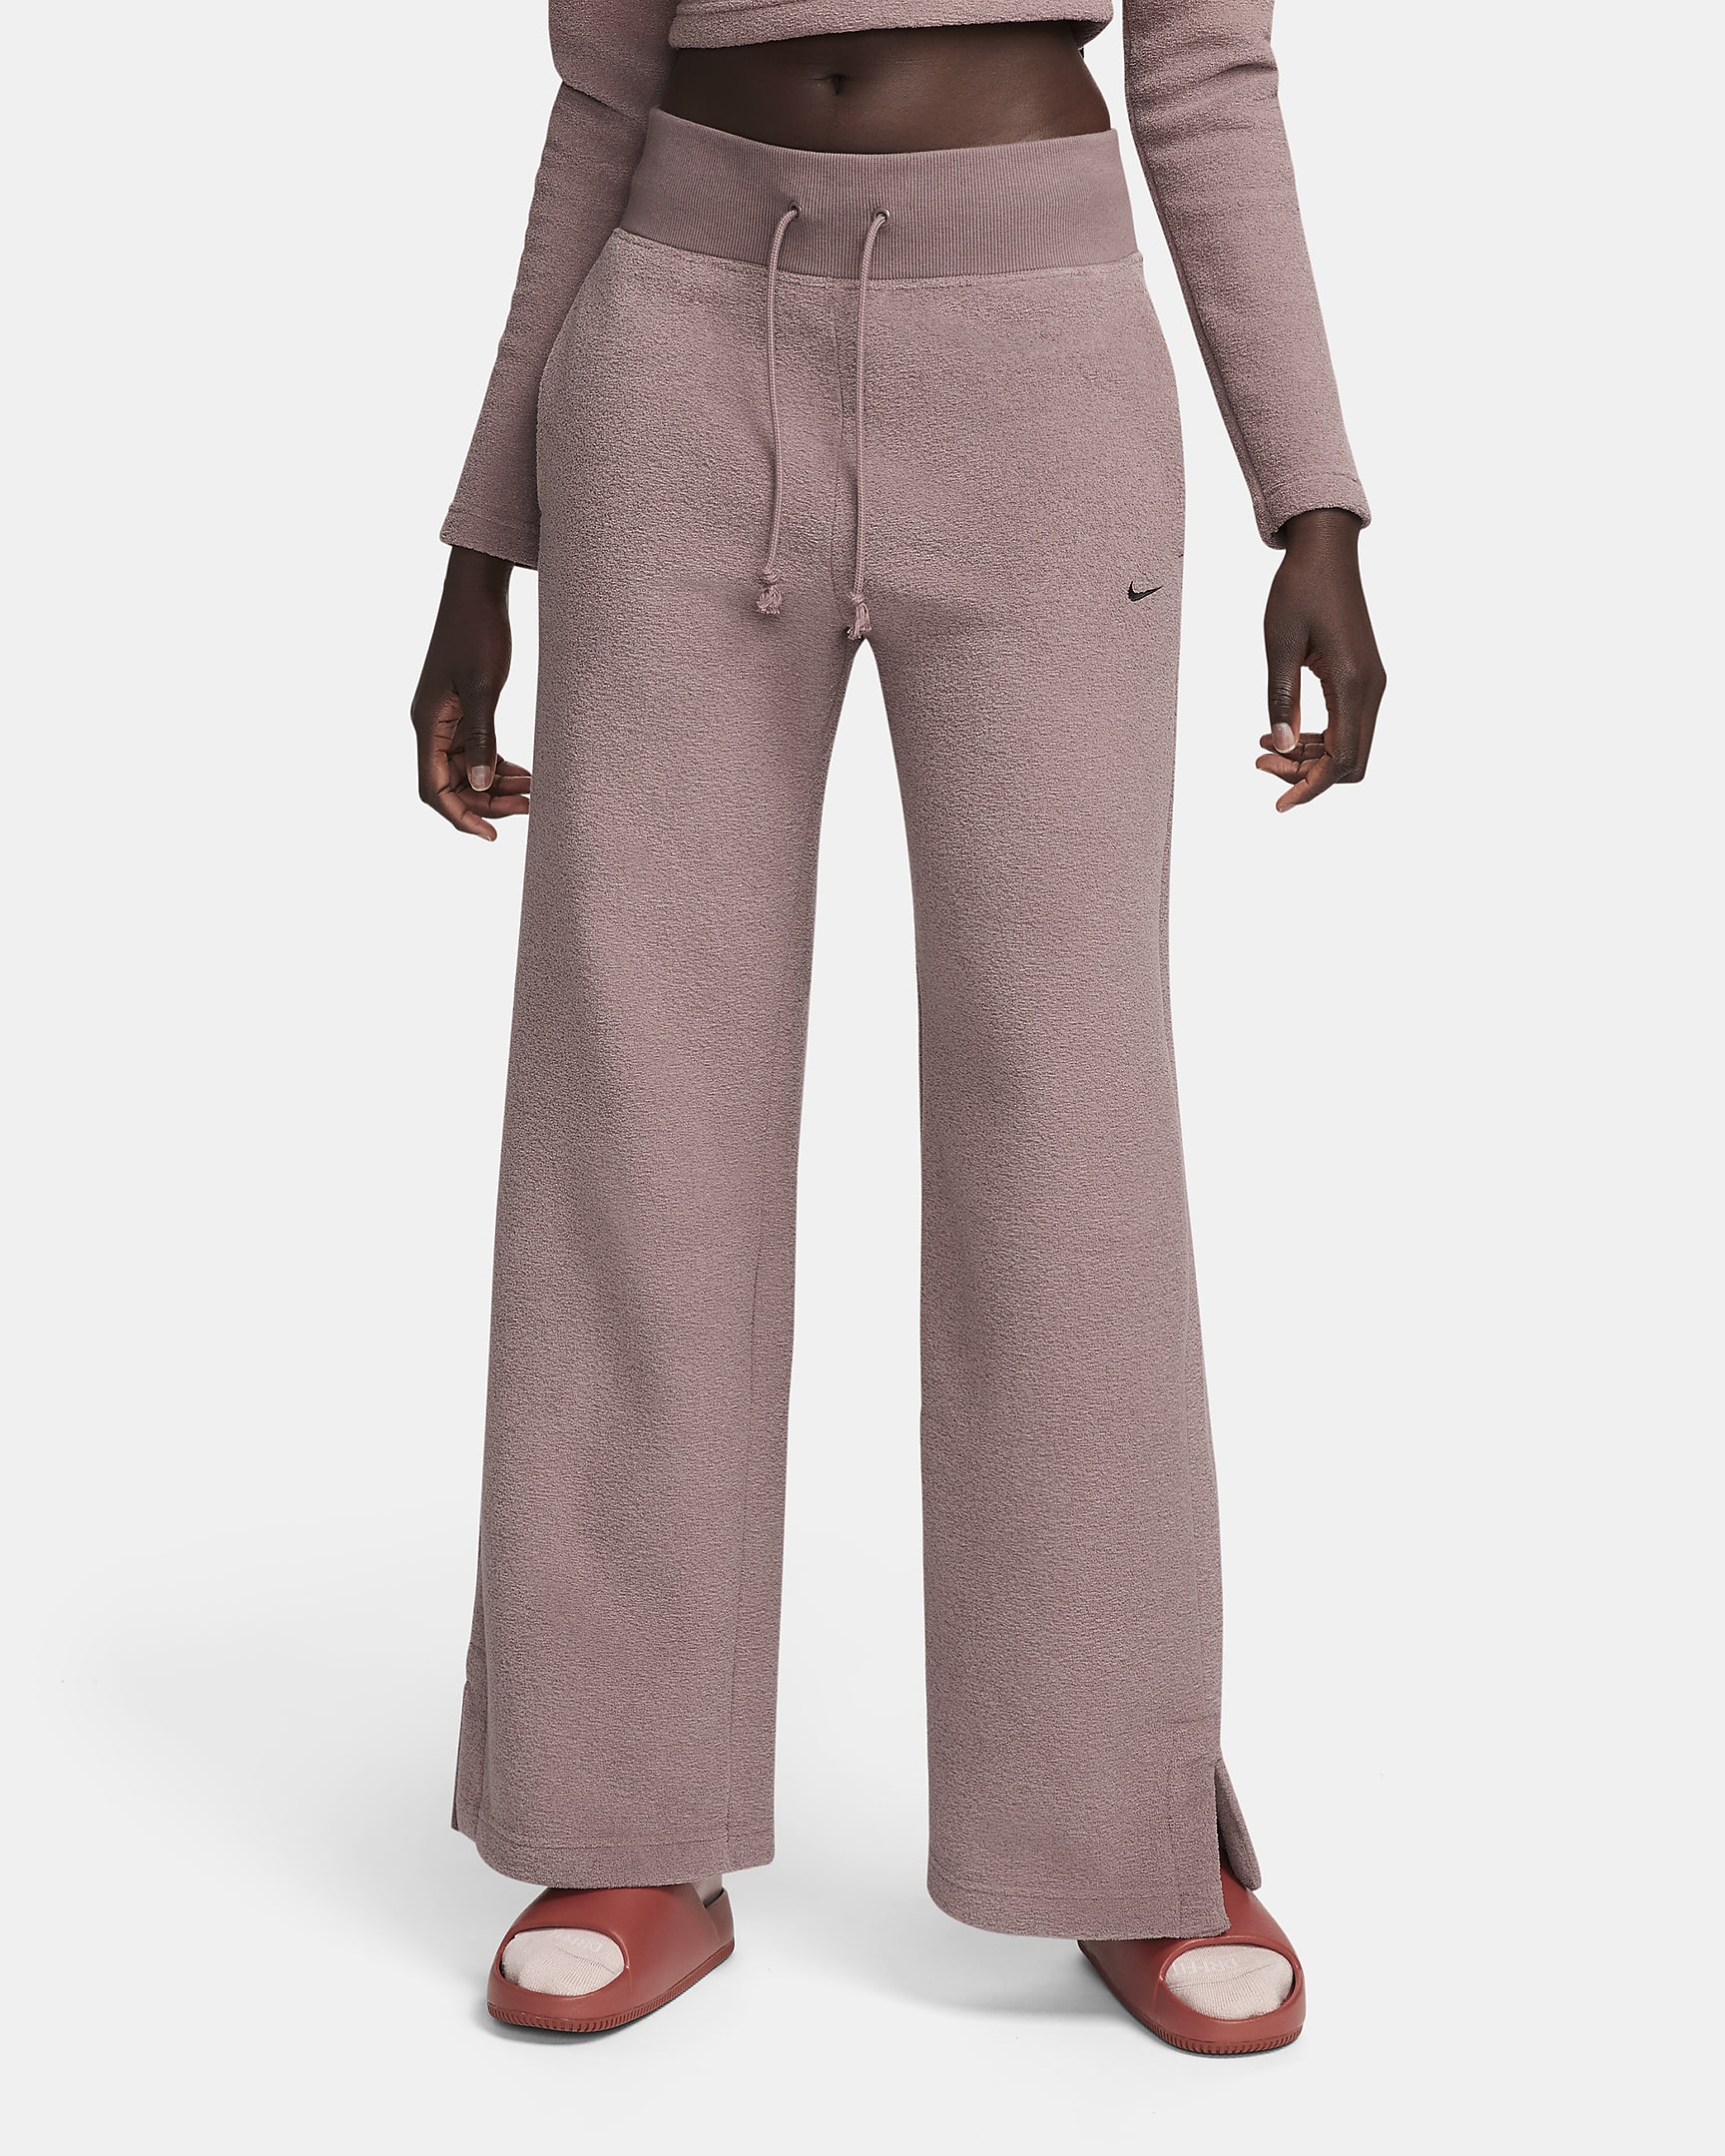 Pantaloni confortevoli in fleece a gamba larga e vita alta Nike Sportswear Phoenix Plush – Donna - Smokey Mauve/Nero